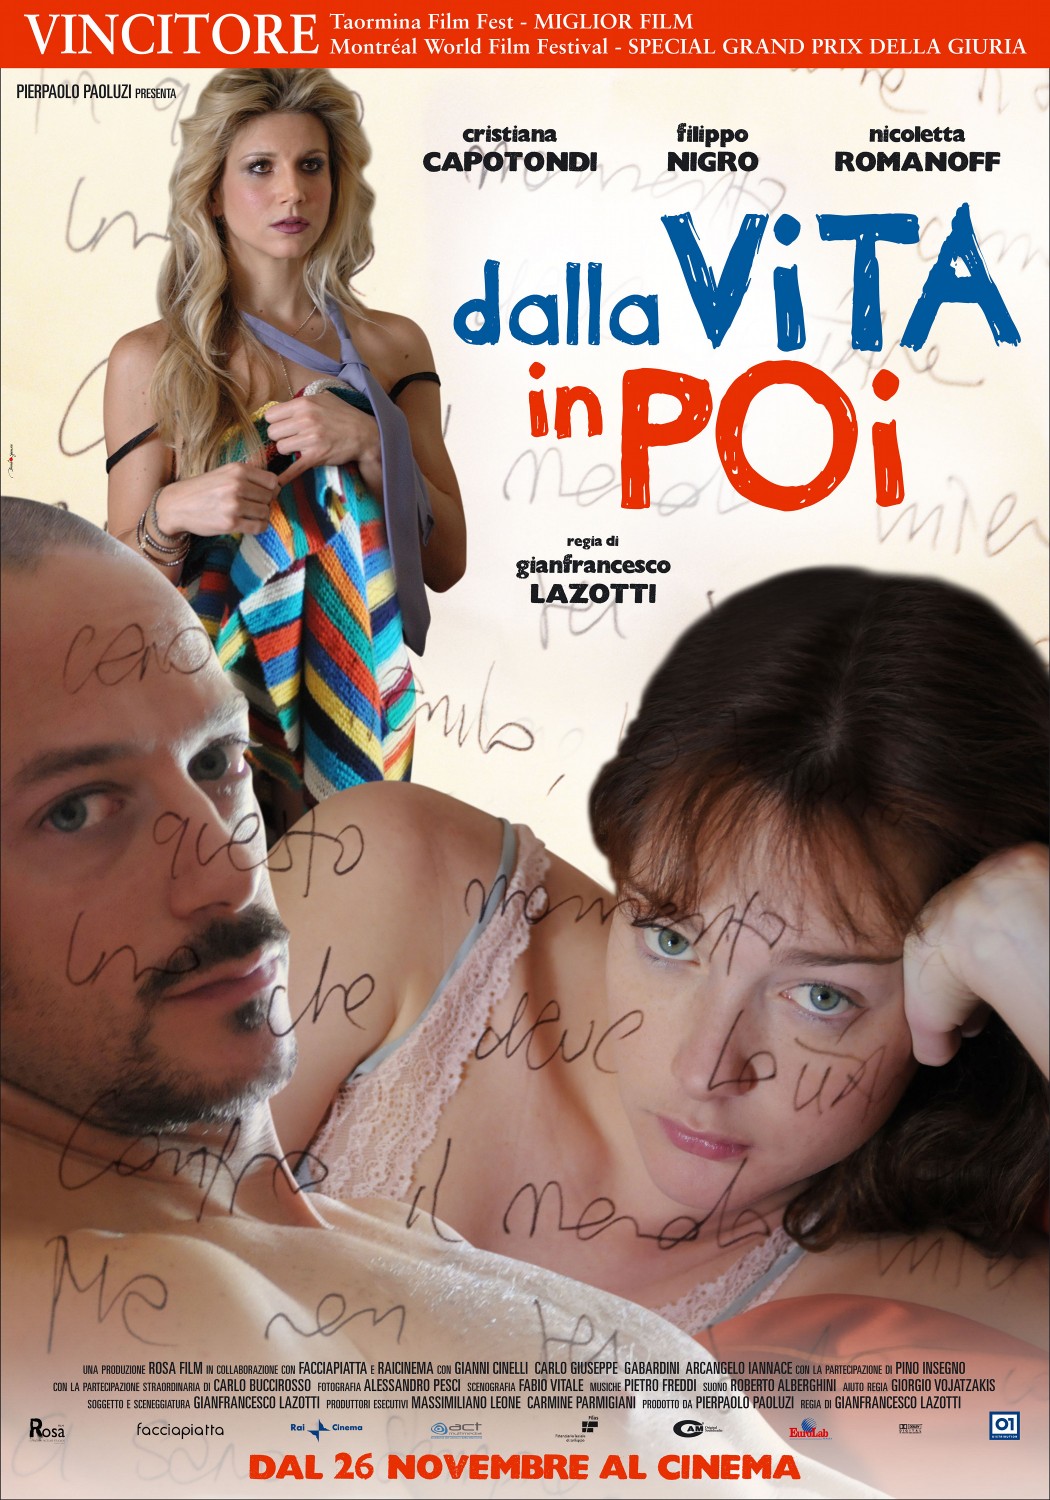 Extra Large Movie Poster Image for Dalla vita in poi 